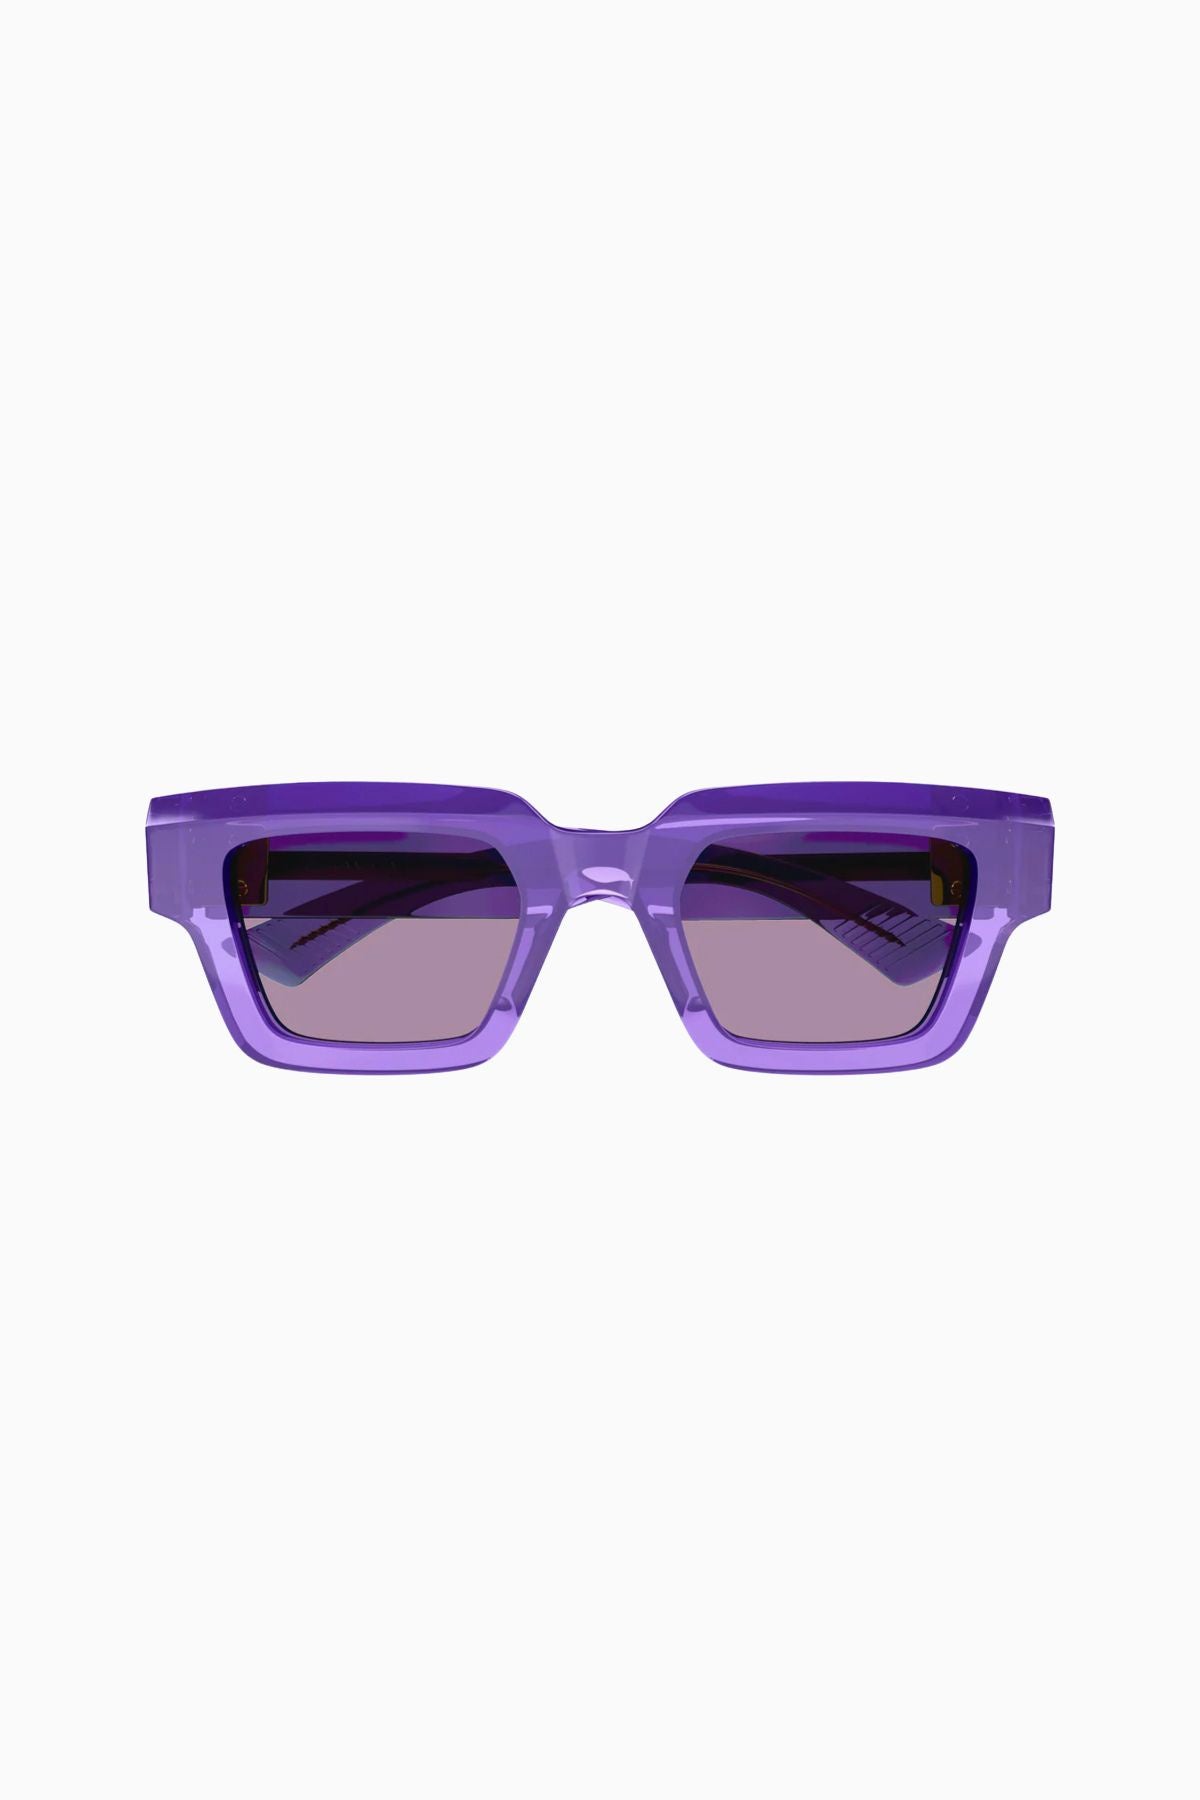 Bottega Veneta Square Framed Sunglasses - Violet